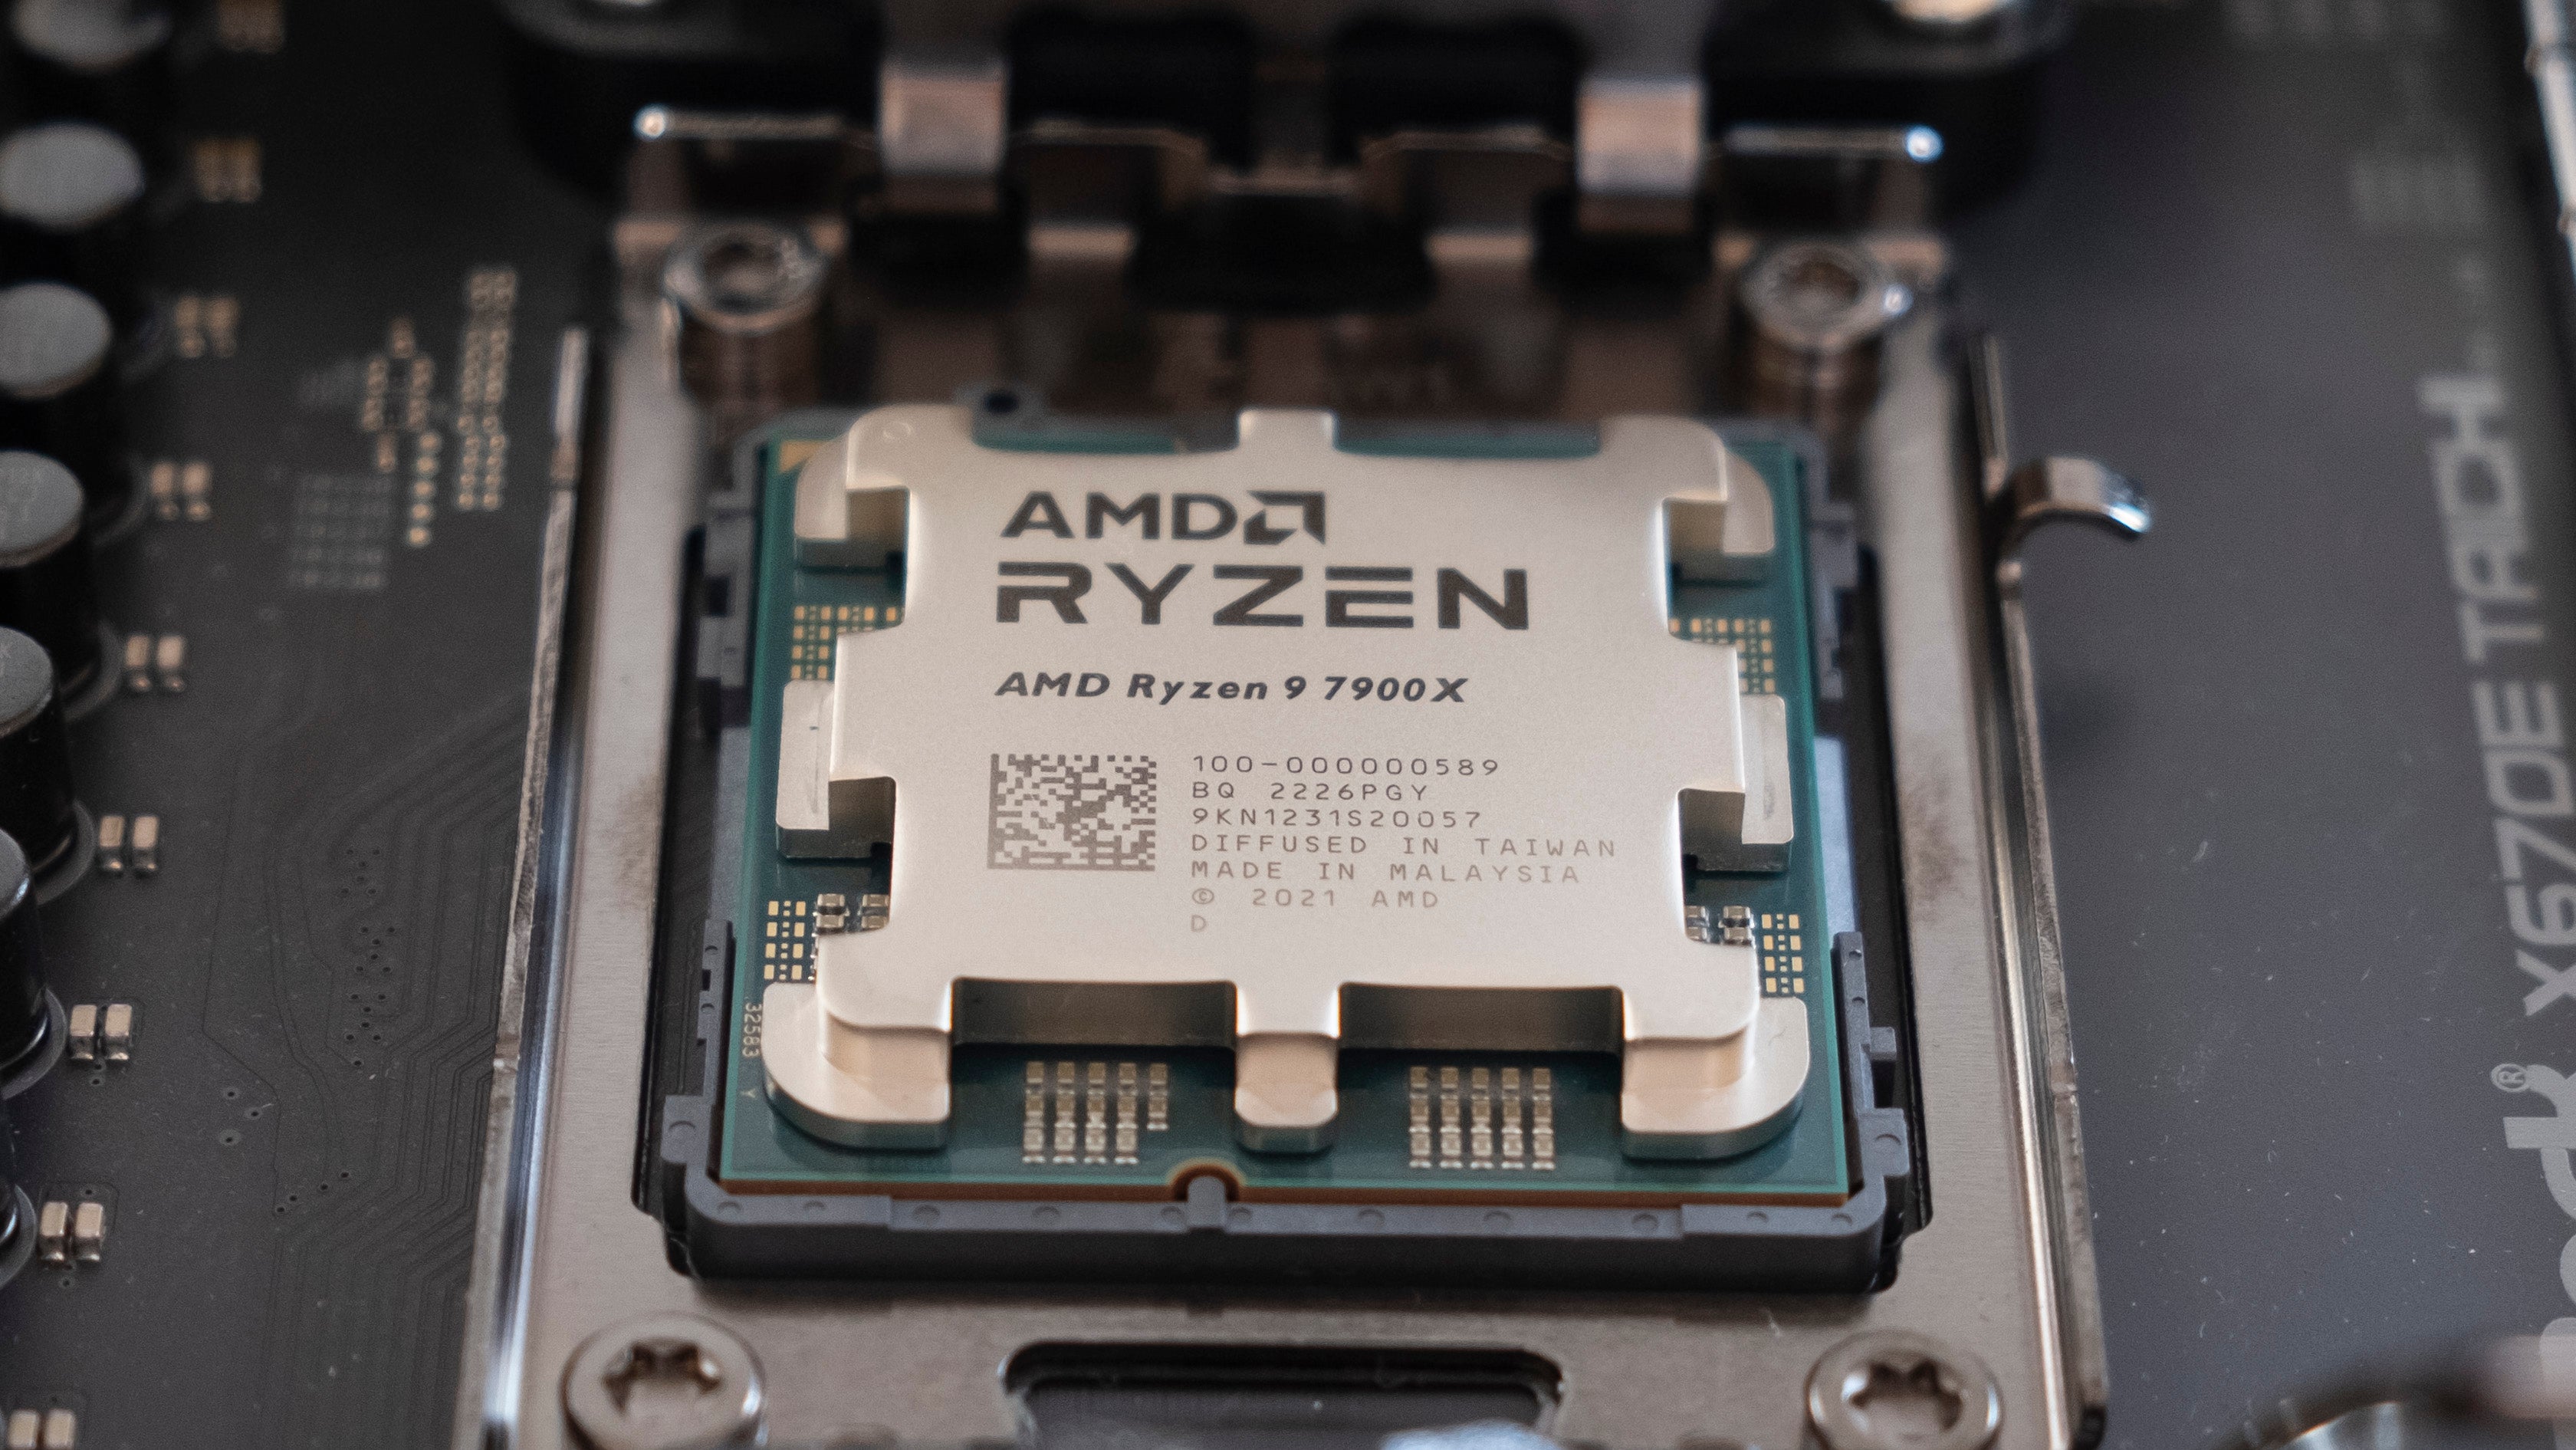 an amd ryzen 9 7900x processor, shown on a computer motherboard